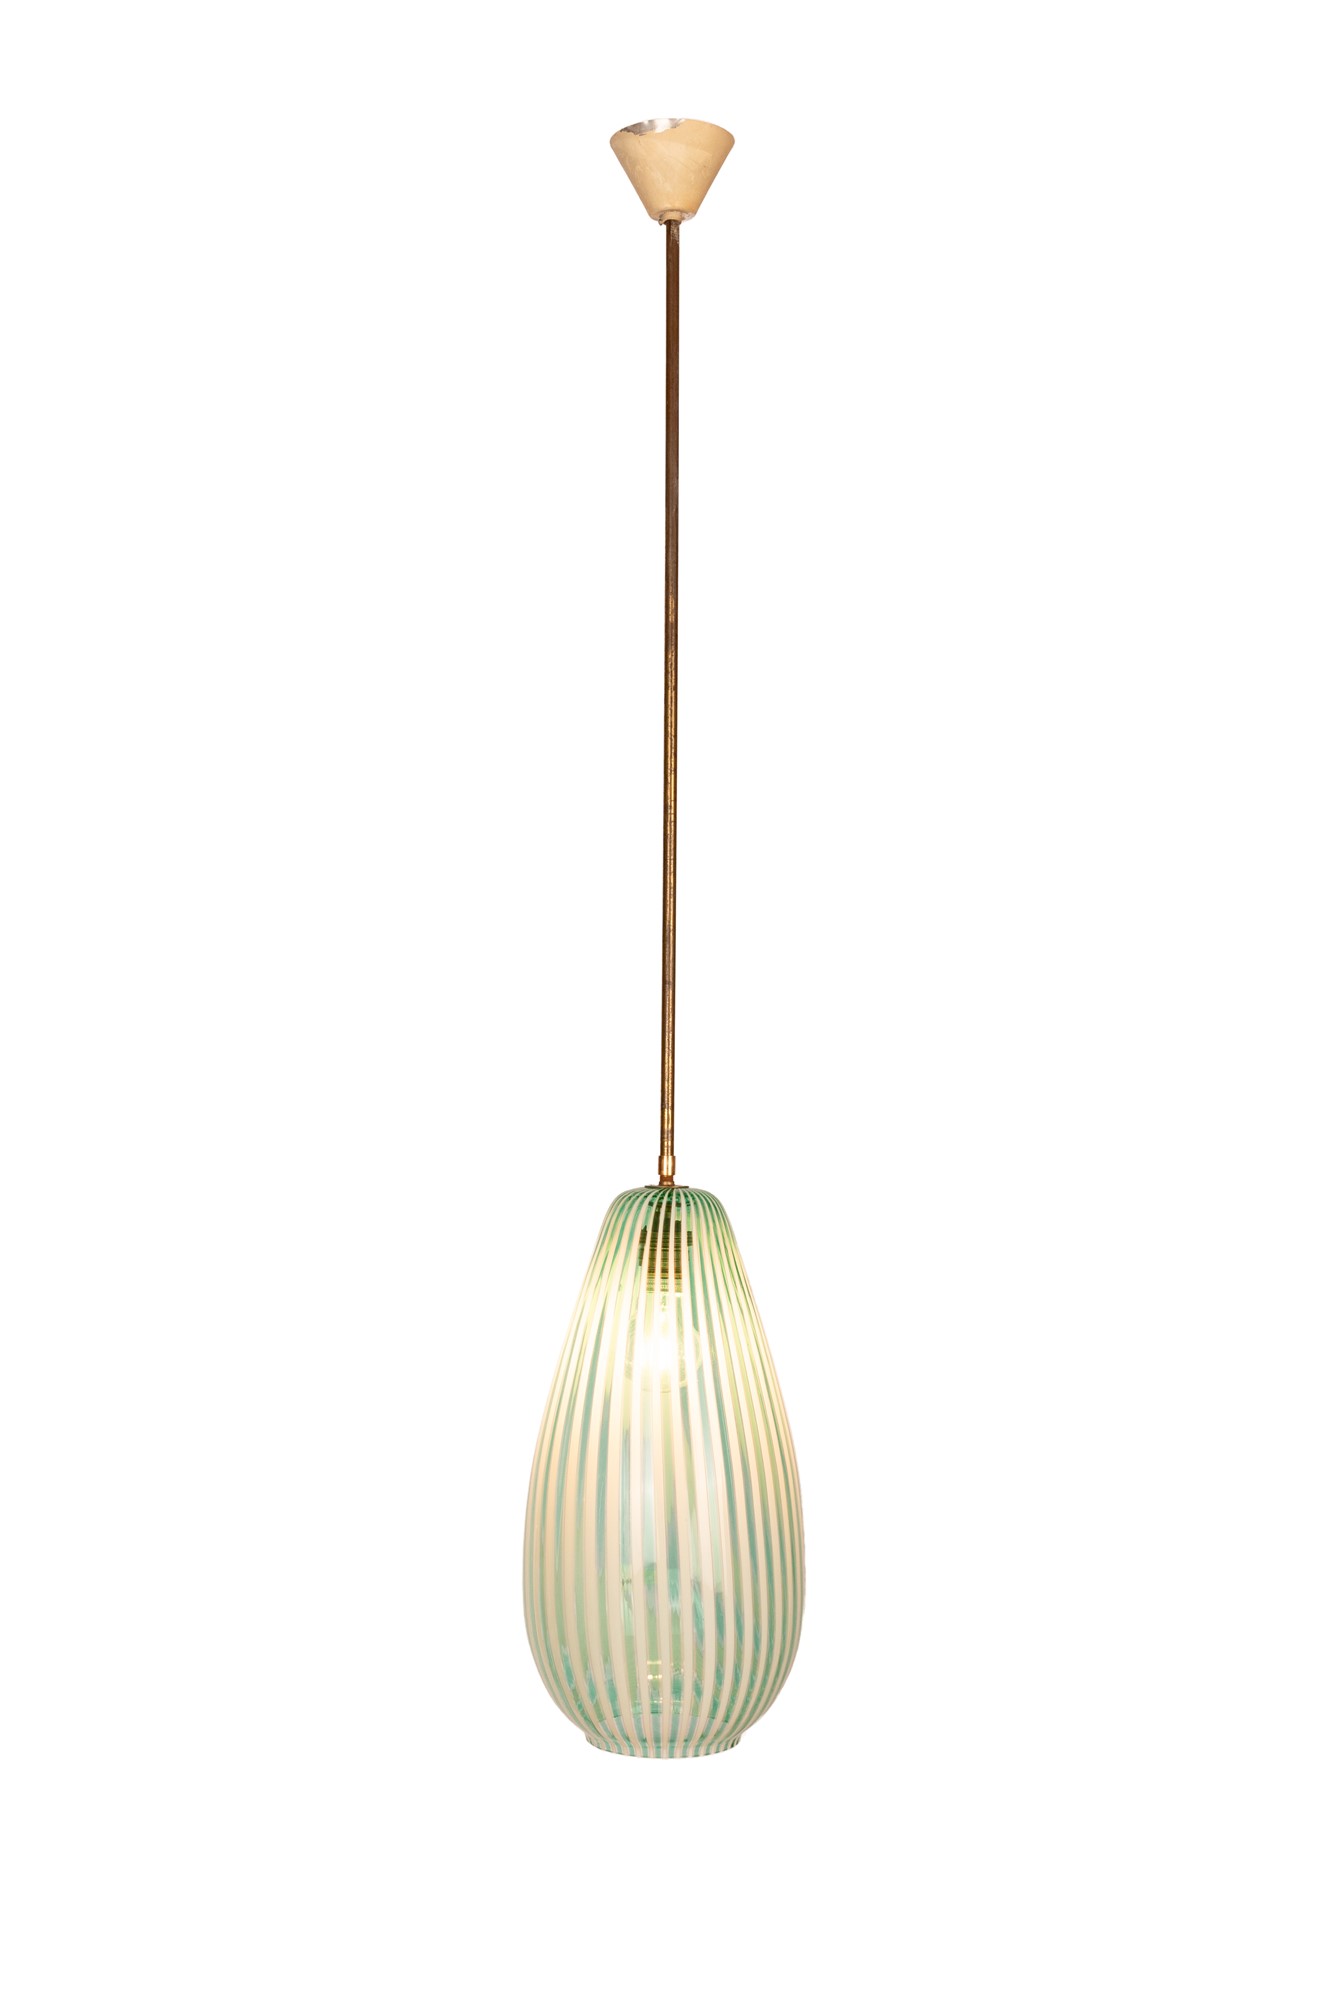 Hanging lamp in zanrifico glass - Image 15 of 16